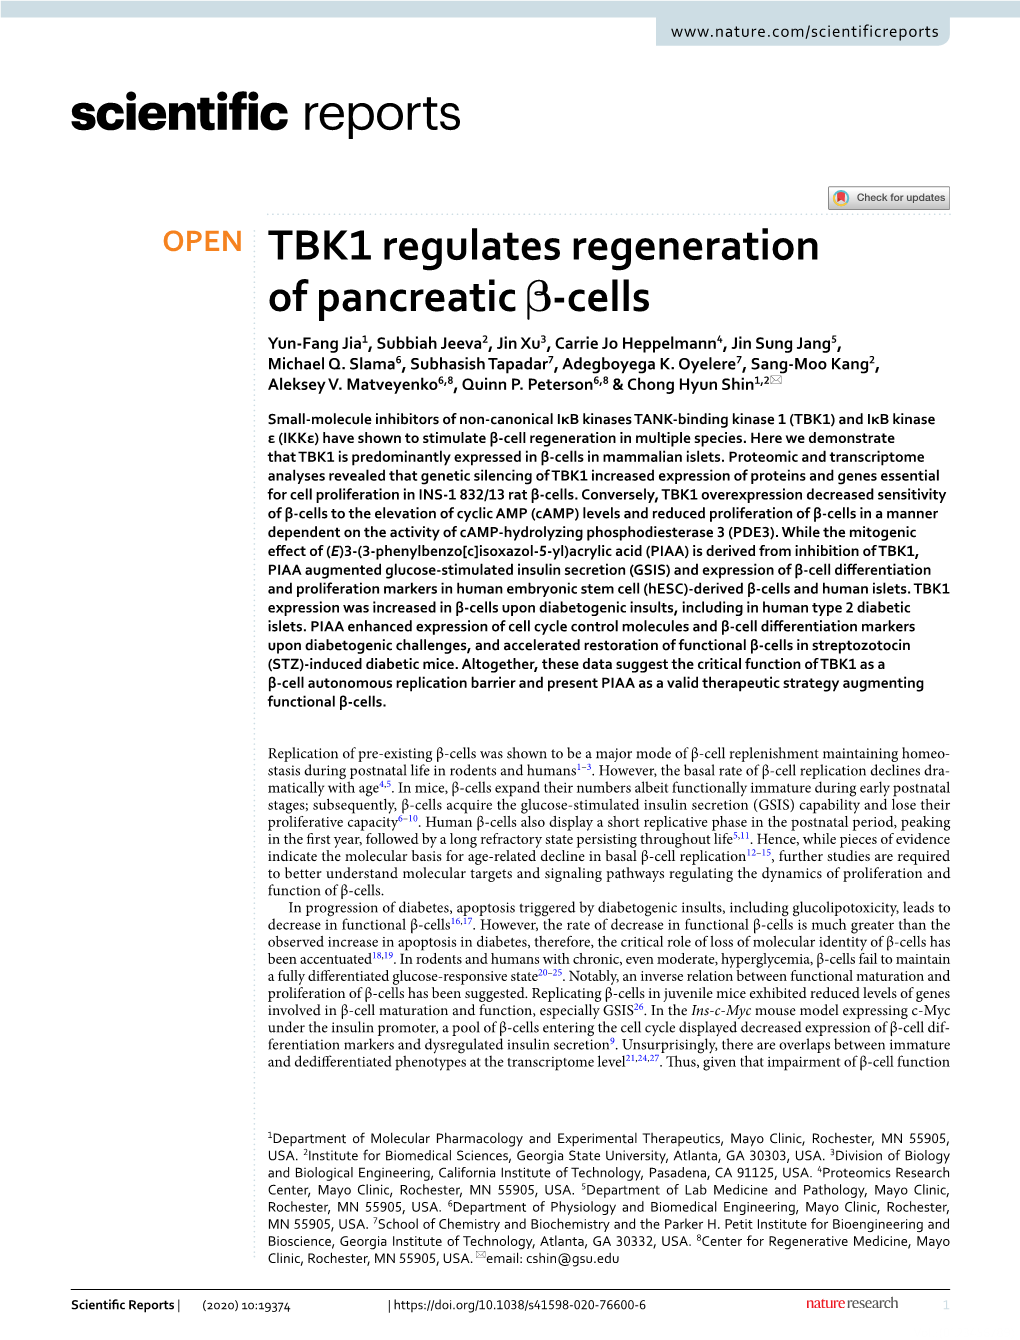 TBK1 Regulates Regeneration of Pancreatic Β-Cells